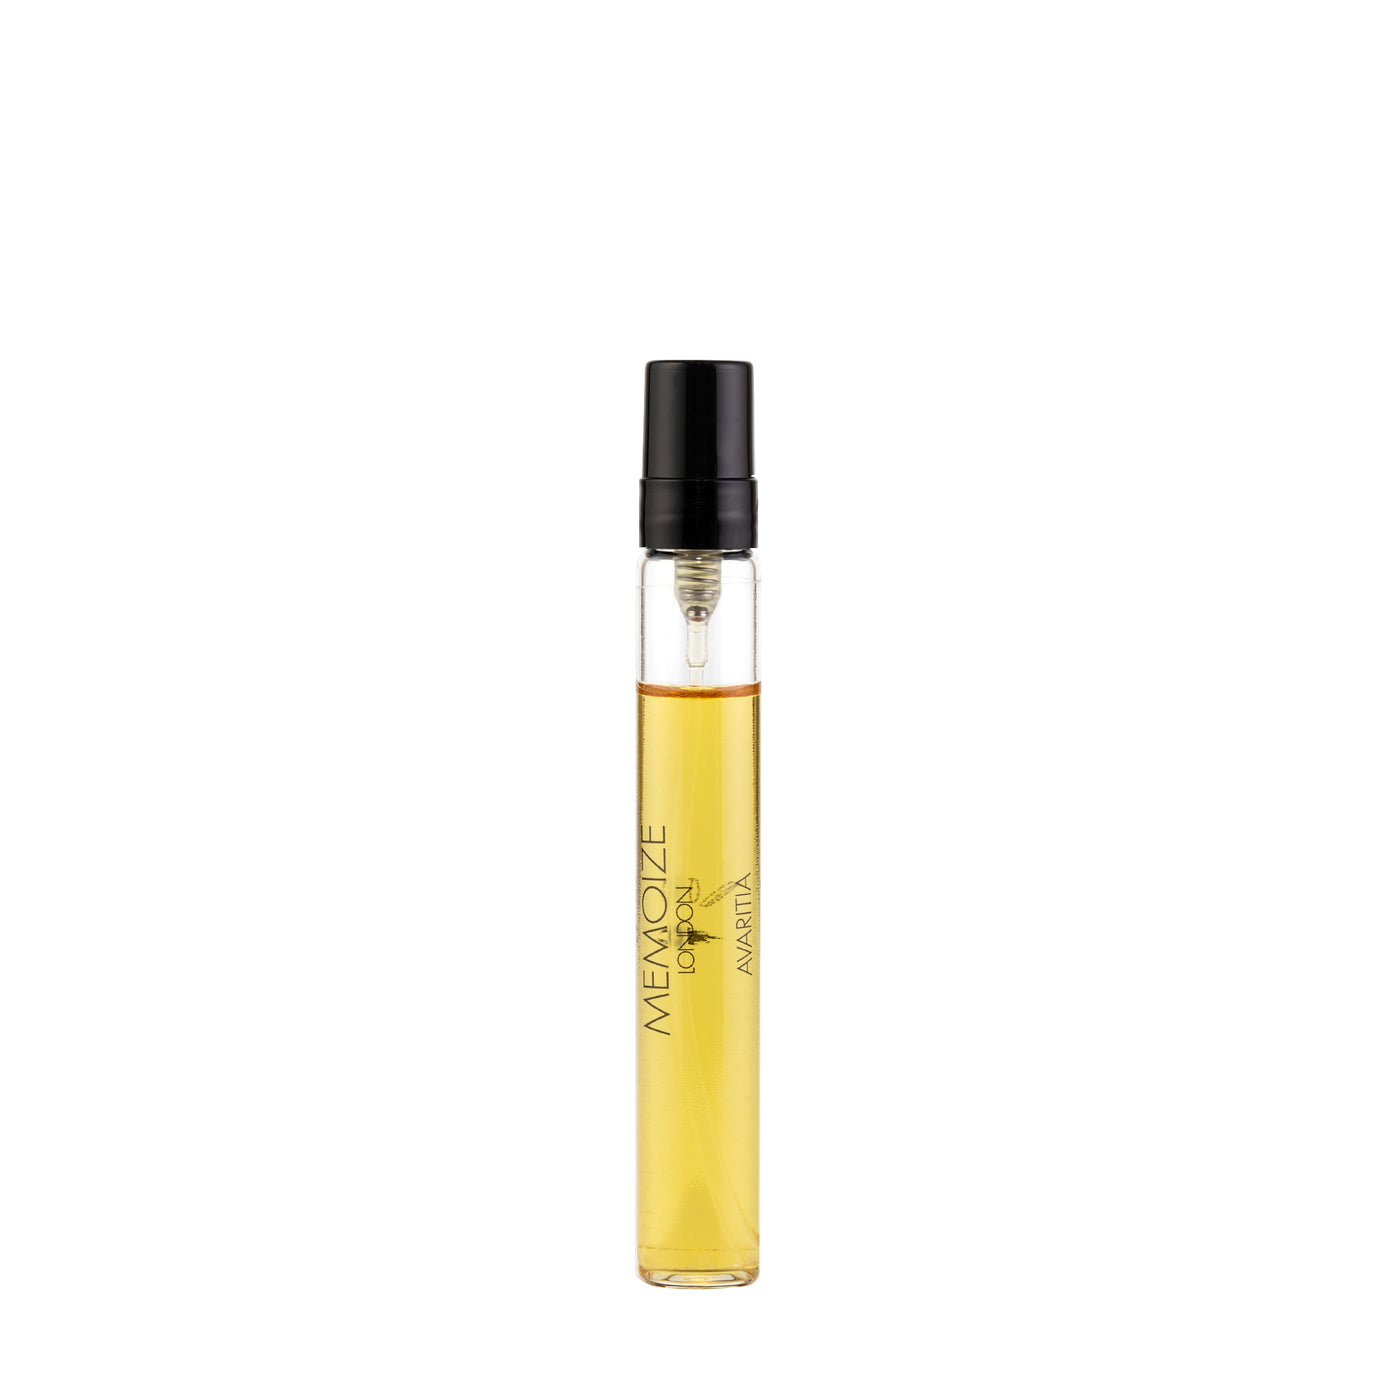 Memoize London AVARITIA Extait de Parfum 7.5ml